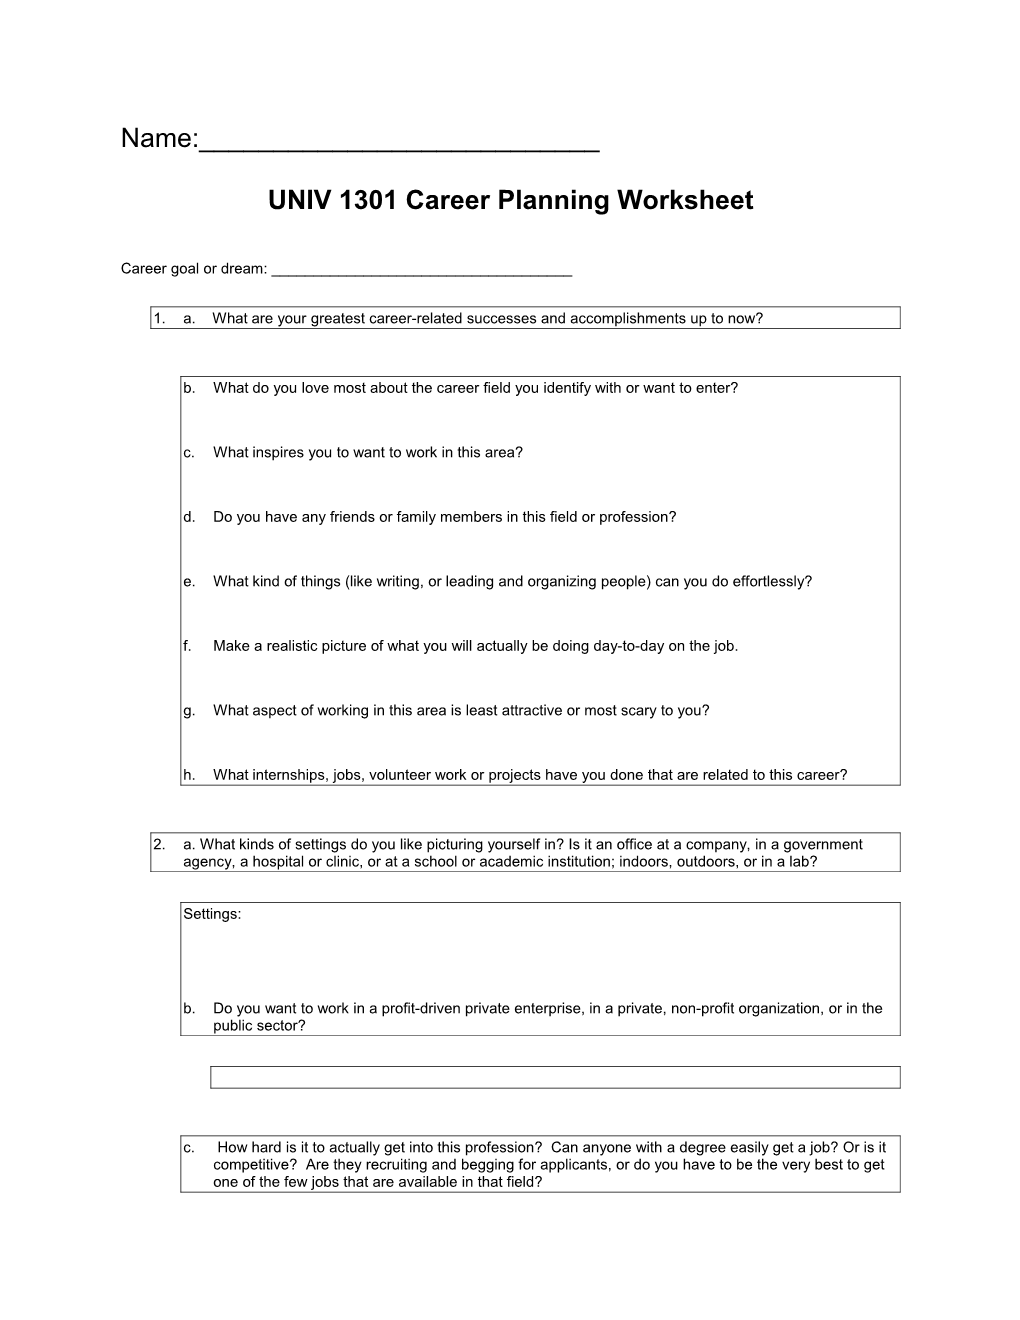 UNIV 1301 Career Planning Worksheet